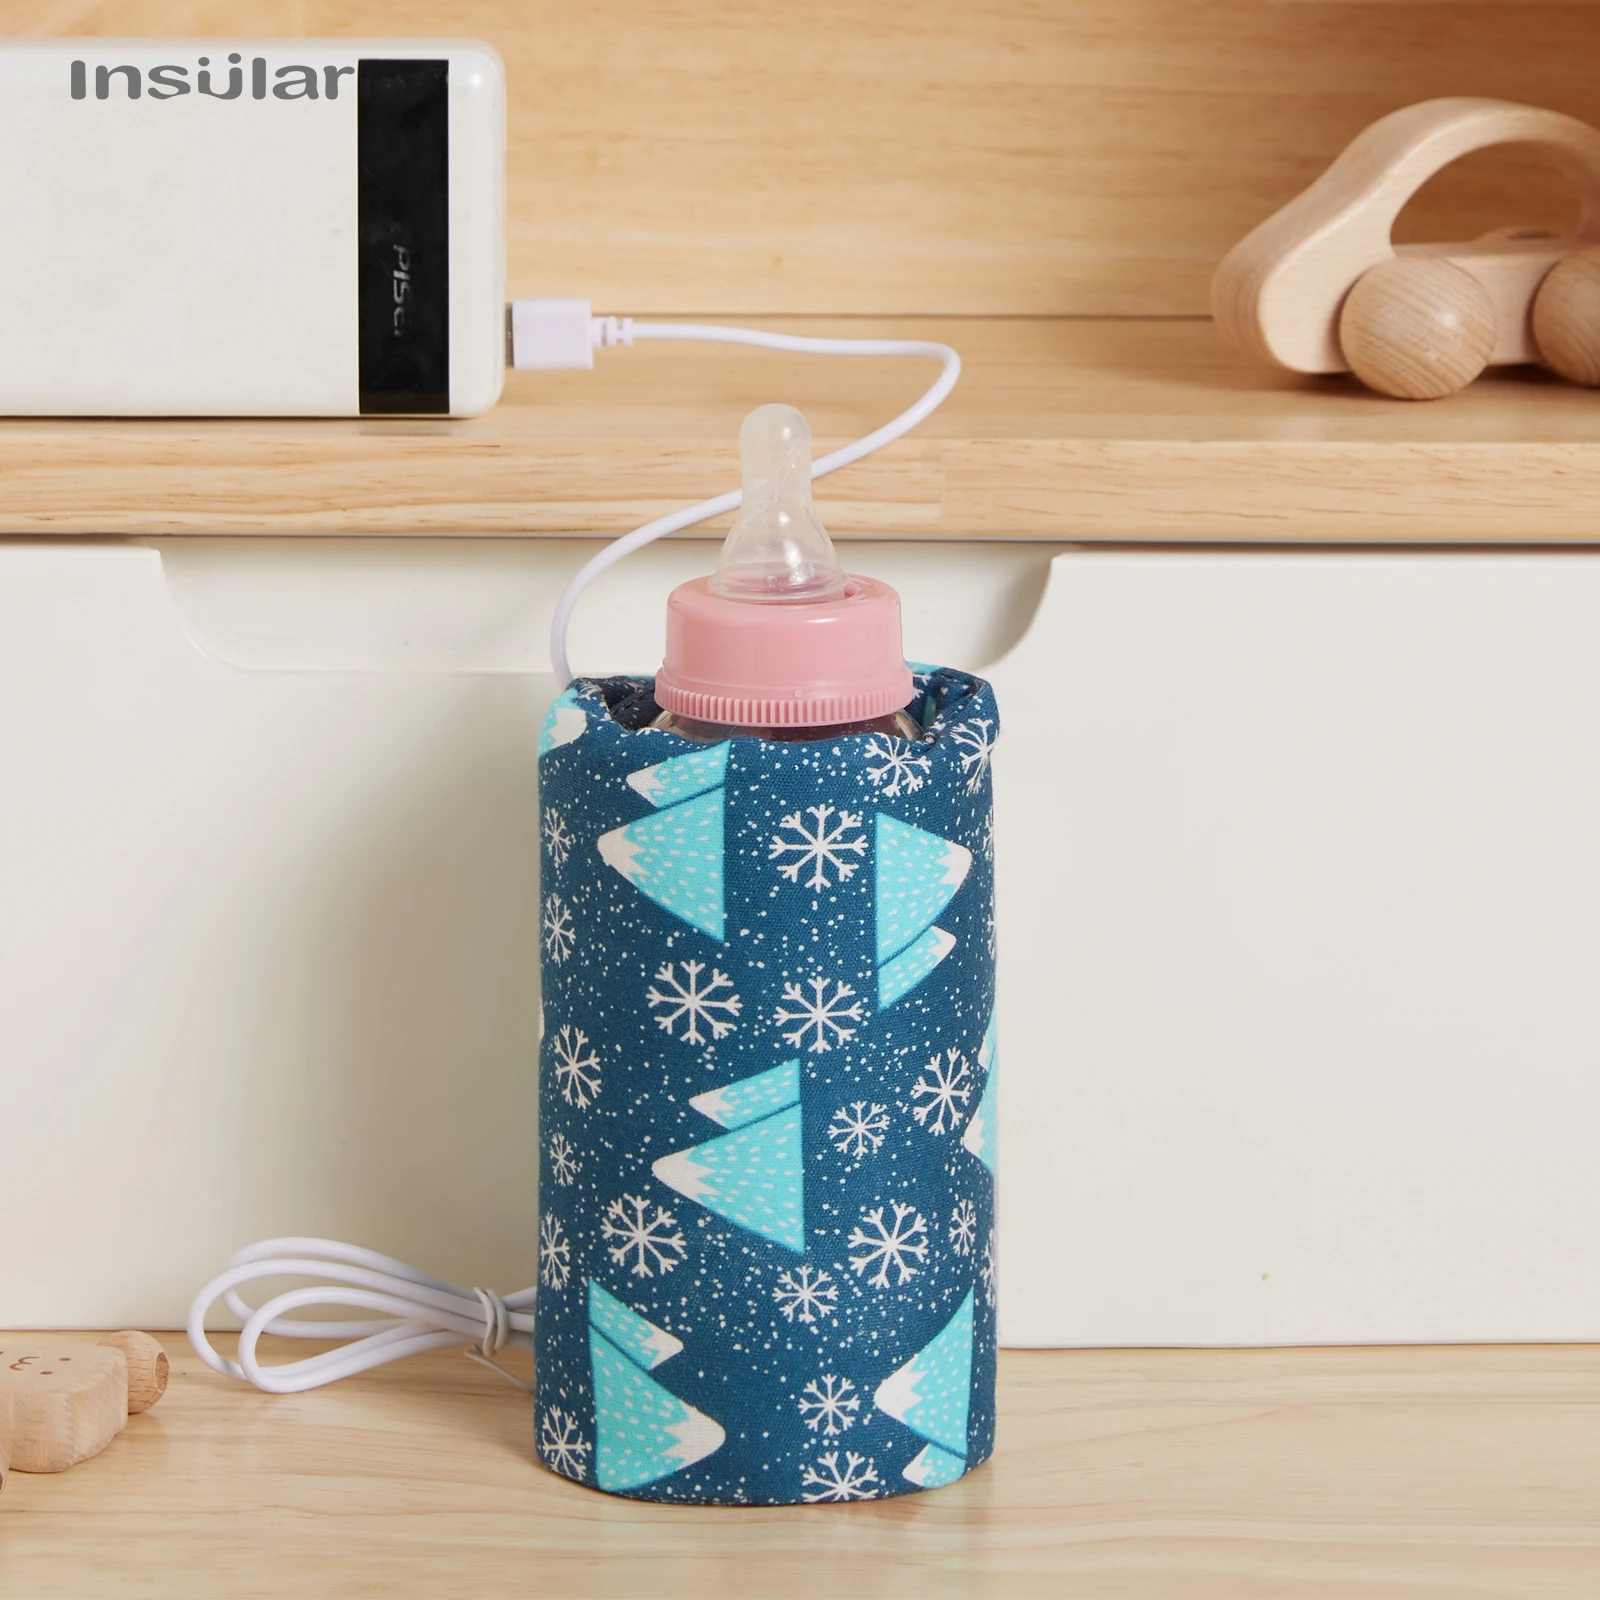 USB Milk Water Warmer Travel Stroller Insulated Bag Baby Nursing Bottle Heater Newborn Infant Portable Bottle Feeding Warmers